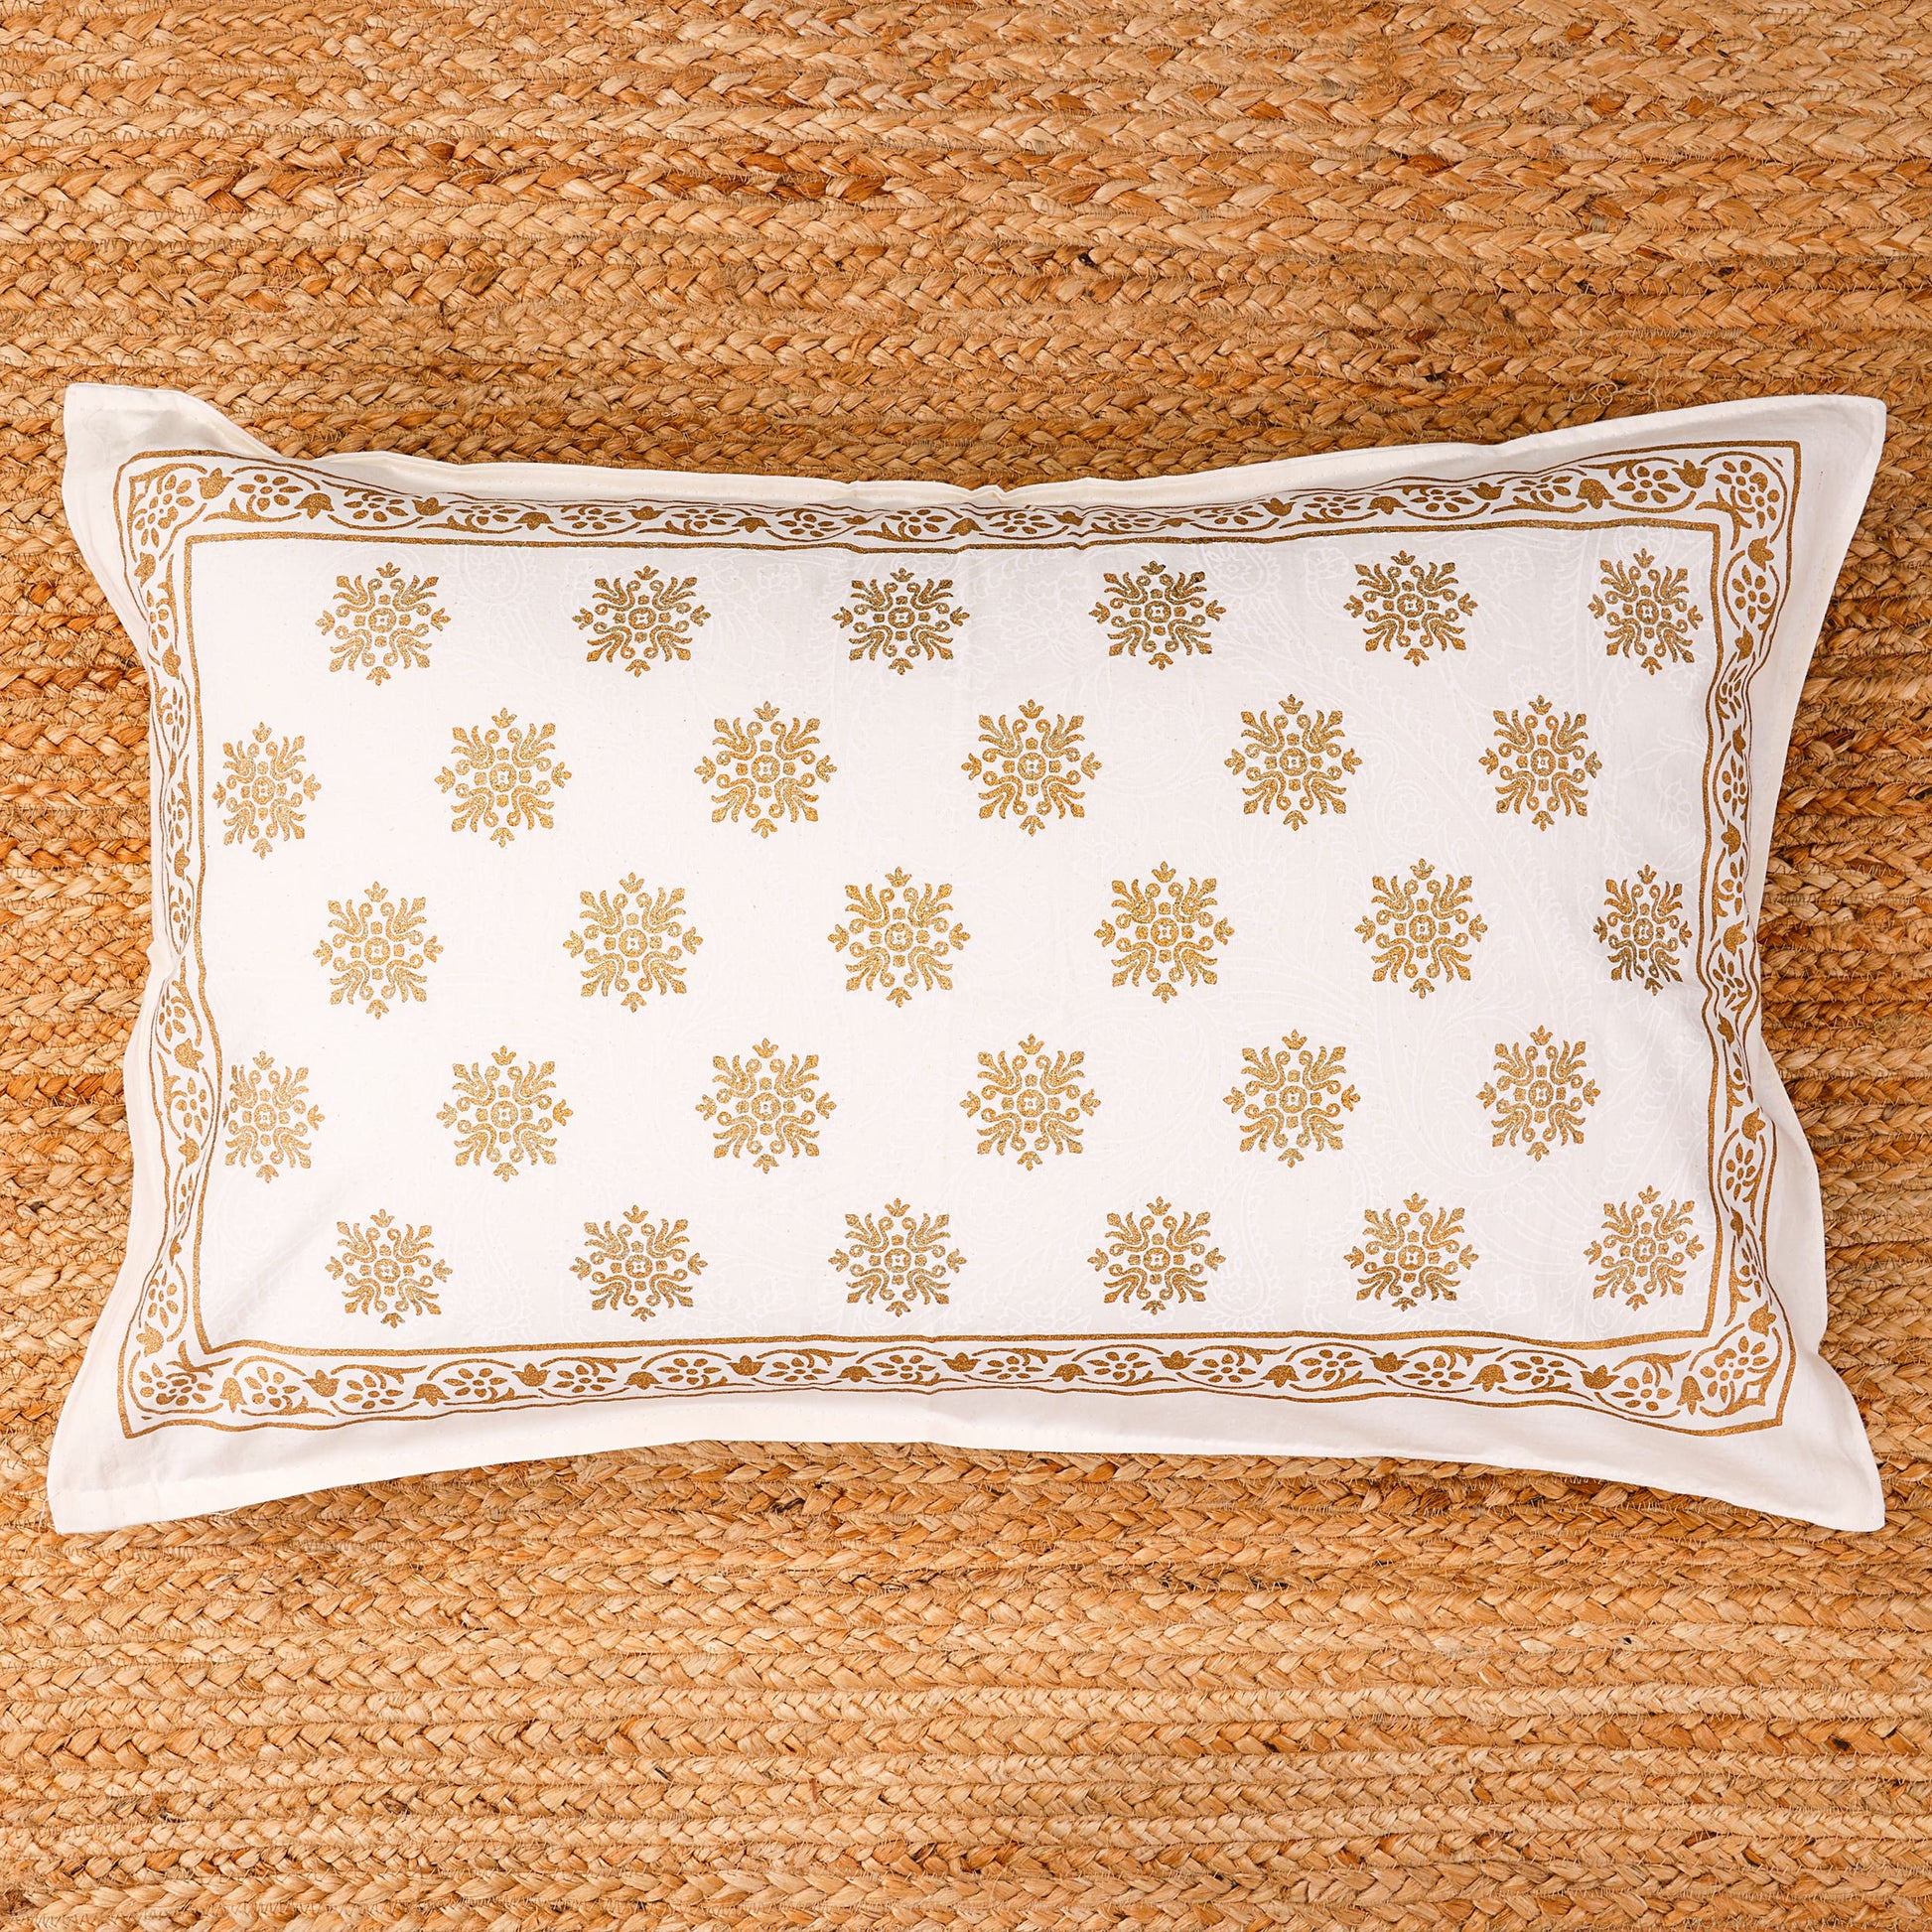 Pure Cotton Block Print Jaipuri Bedsheet - King Size 90*108 inches - Gold Snowflake